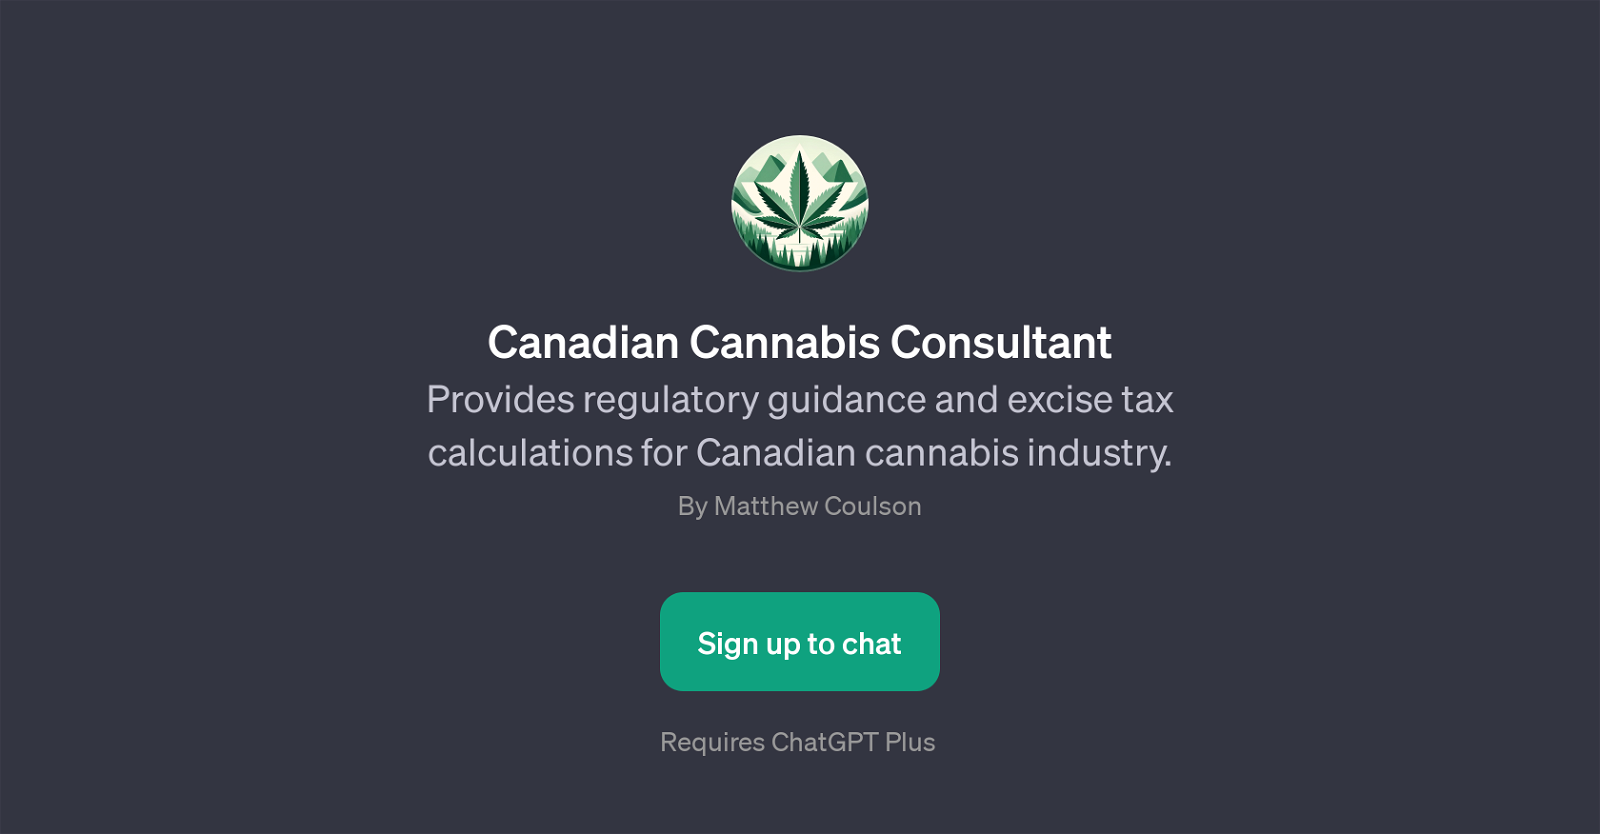 Canadian Cannabis Consultant website